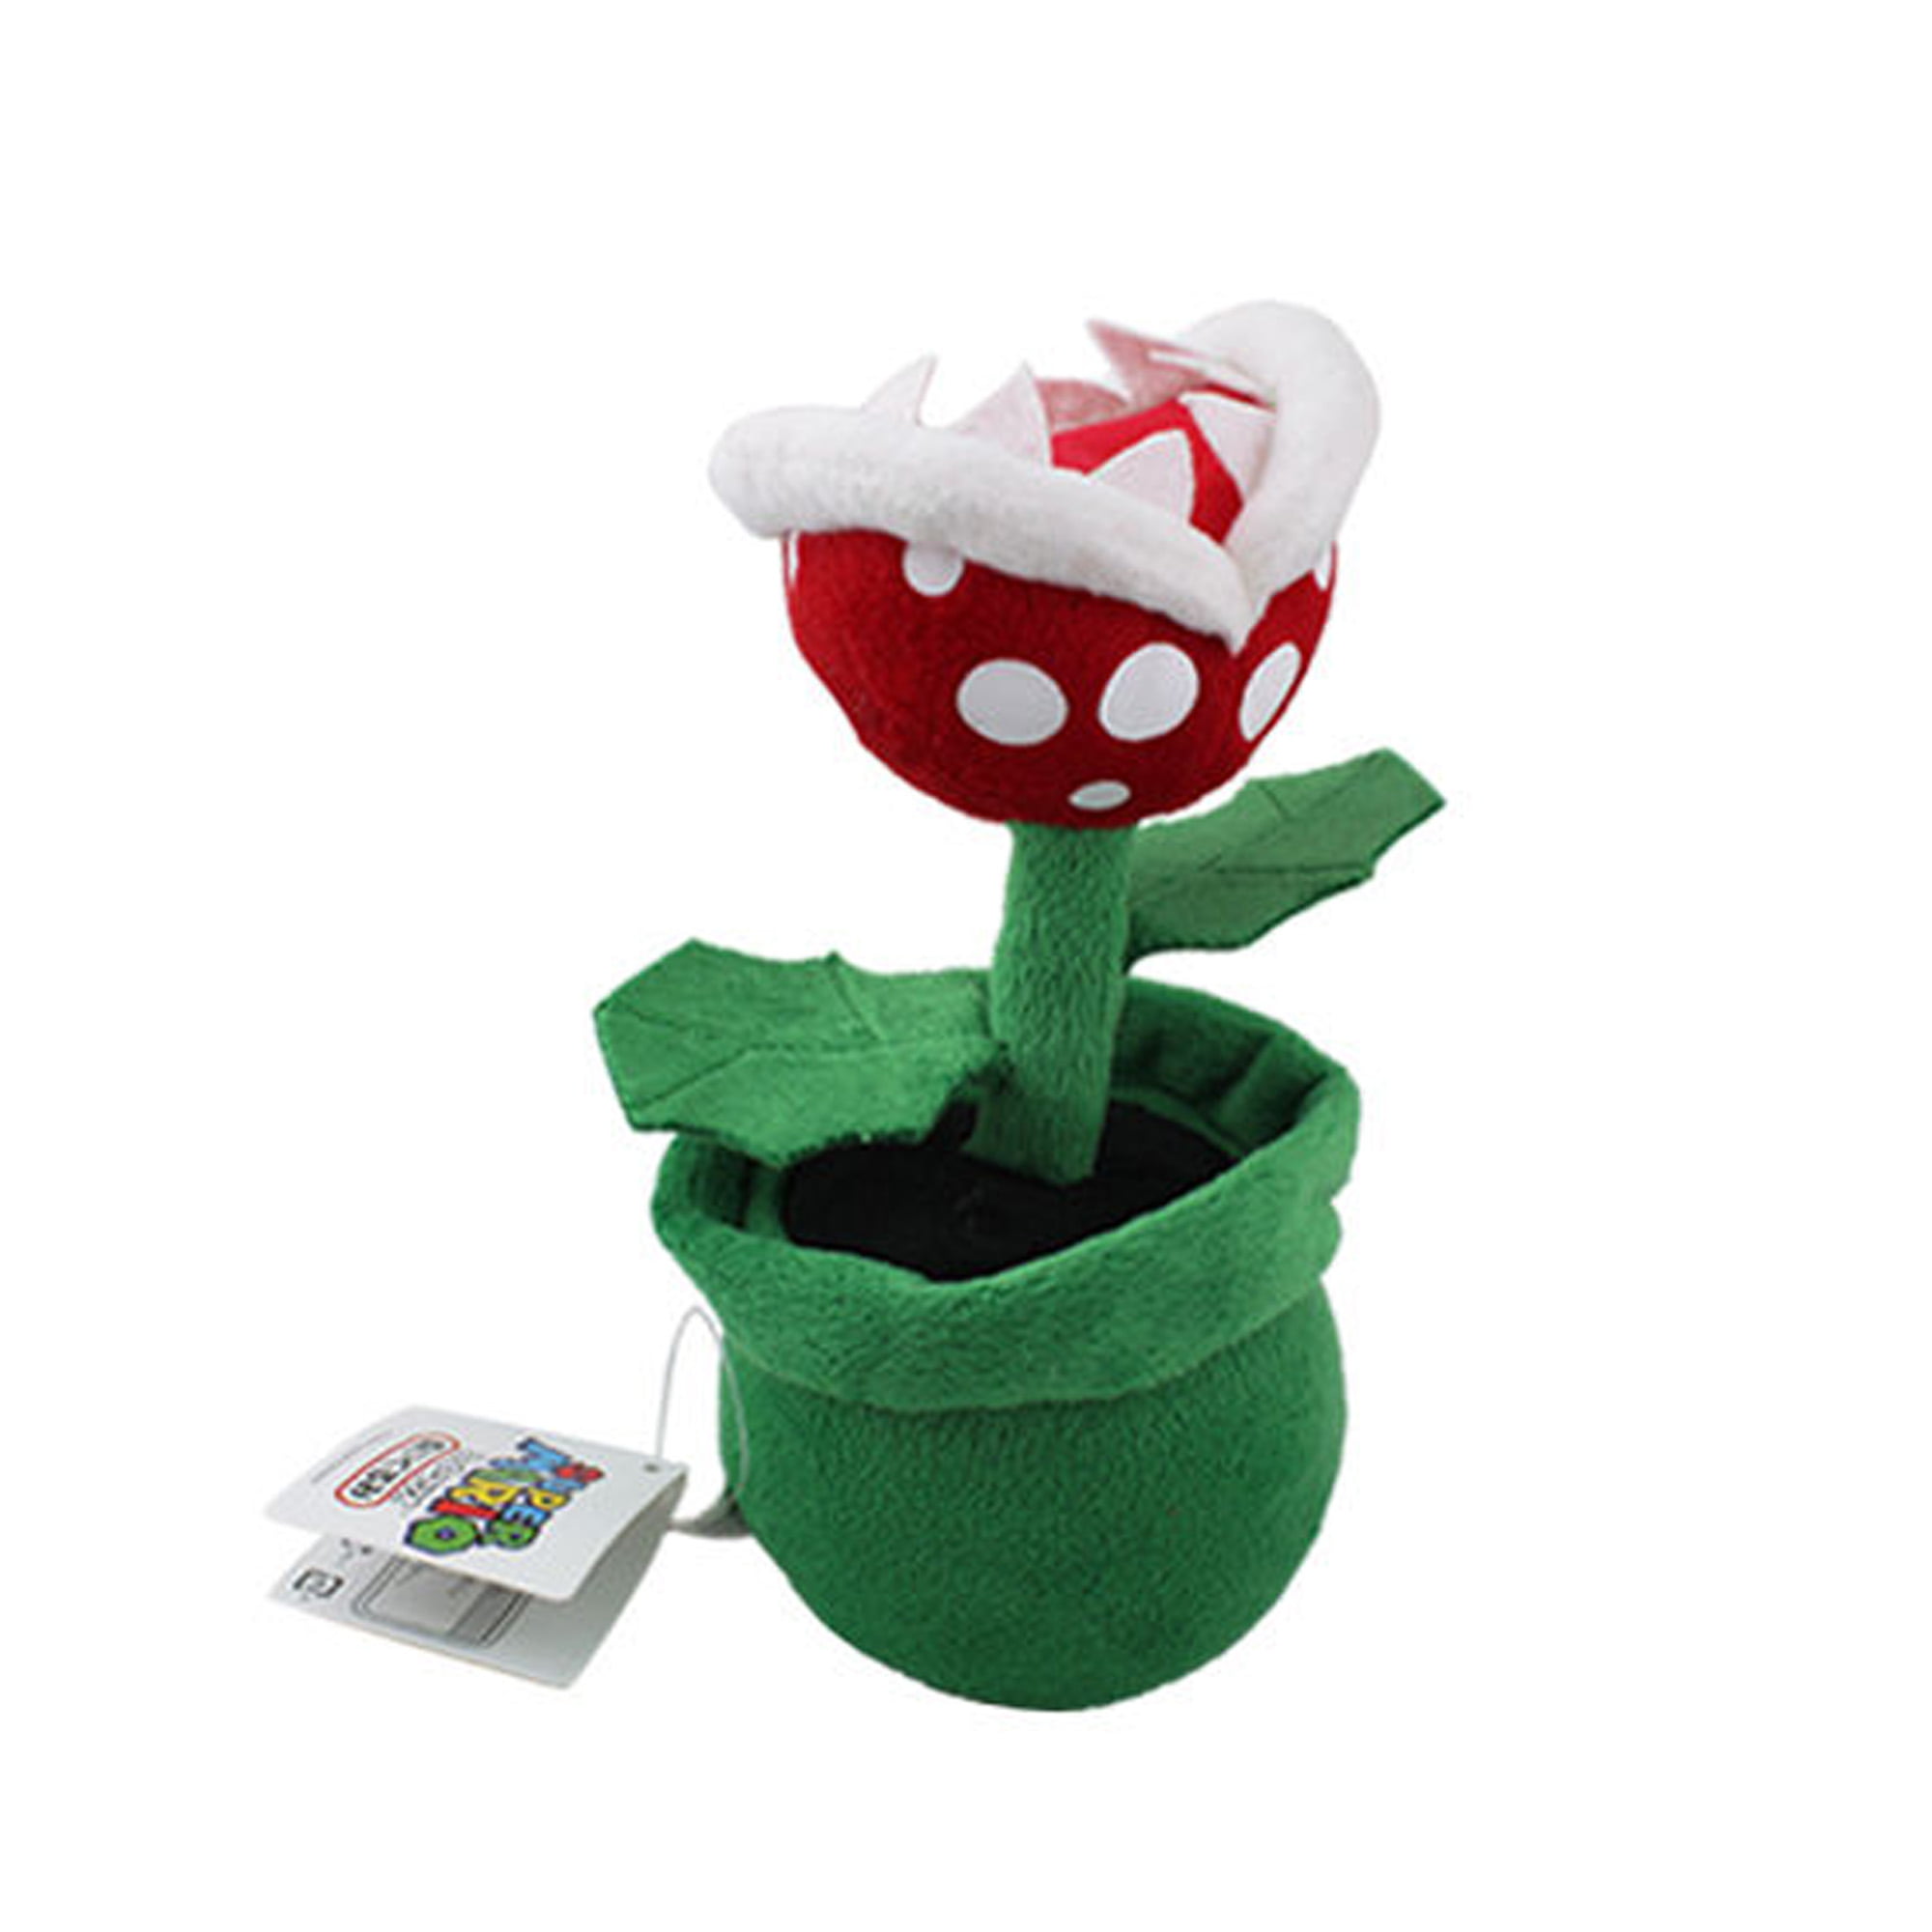 Super Mario Bros Piranha Plant Plush Doll Flower Figure Stuffed Toy 9 inch Gift